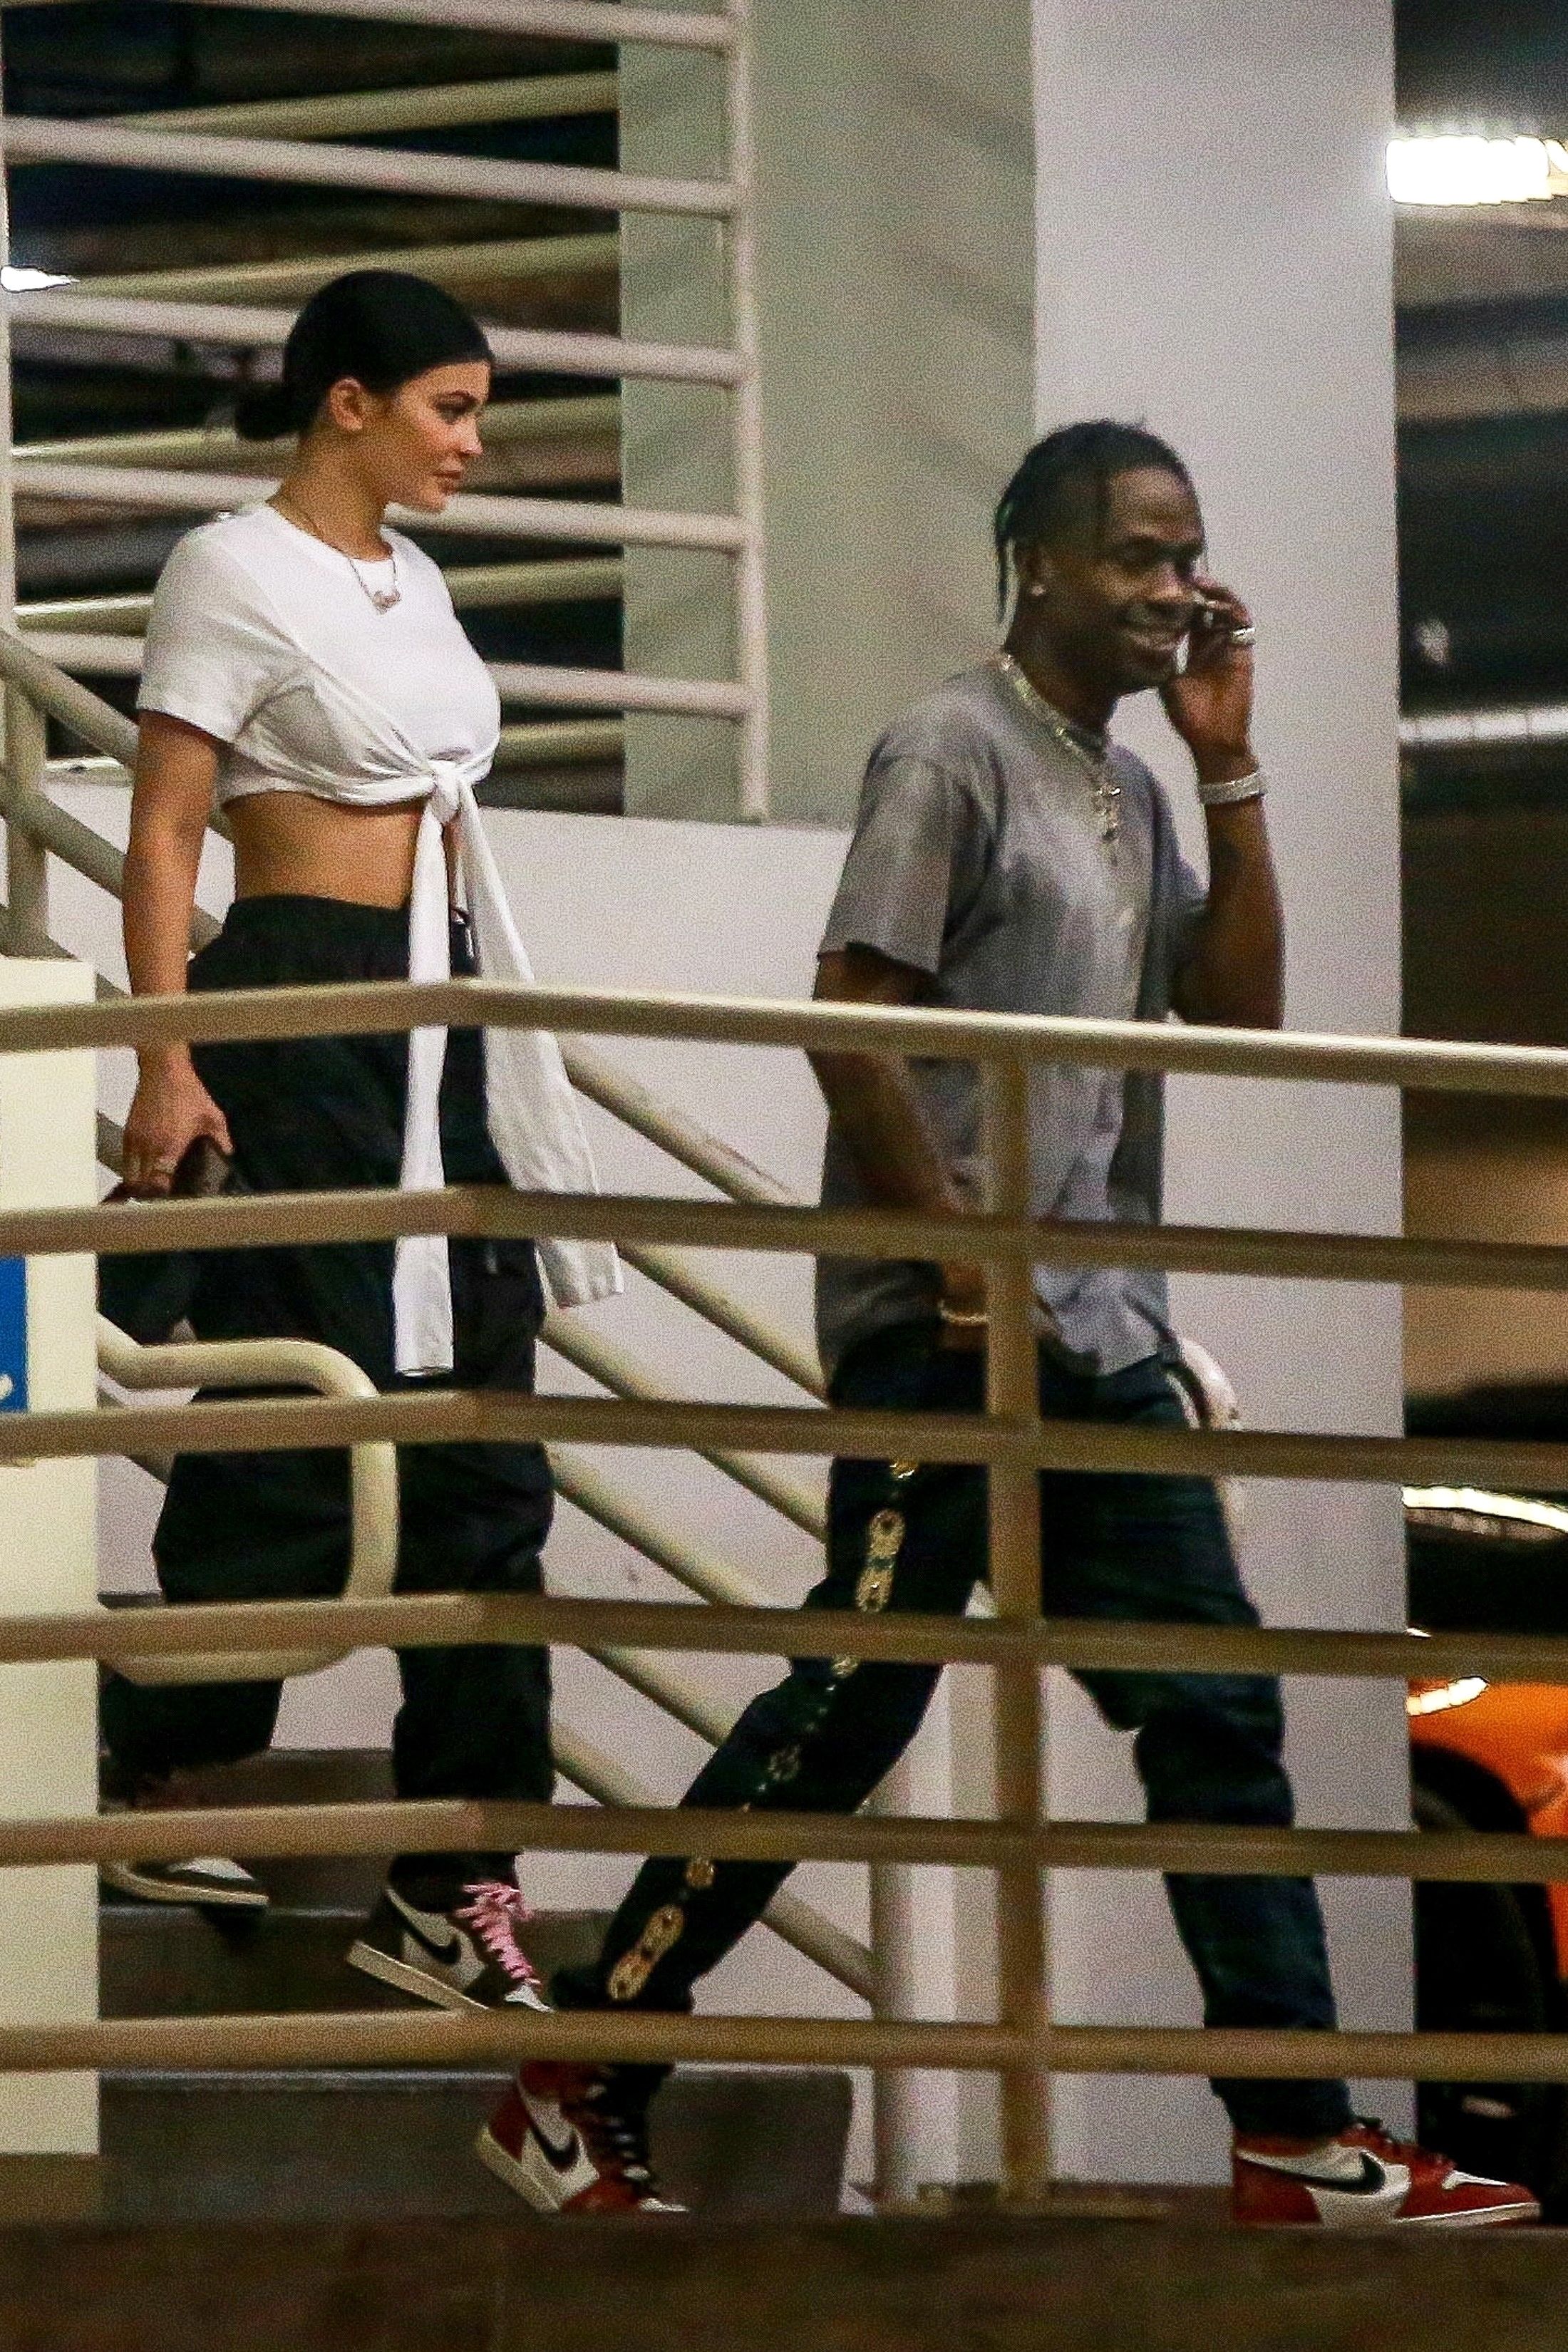 Kylie Jenner, Adidas Rep, Will Wear Rival Brand Nike to Support Boyfriend  Travis Scott